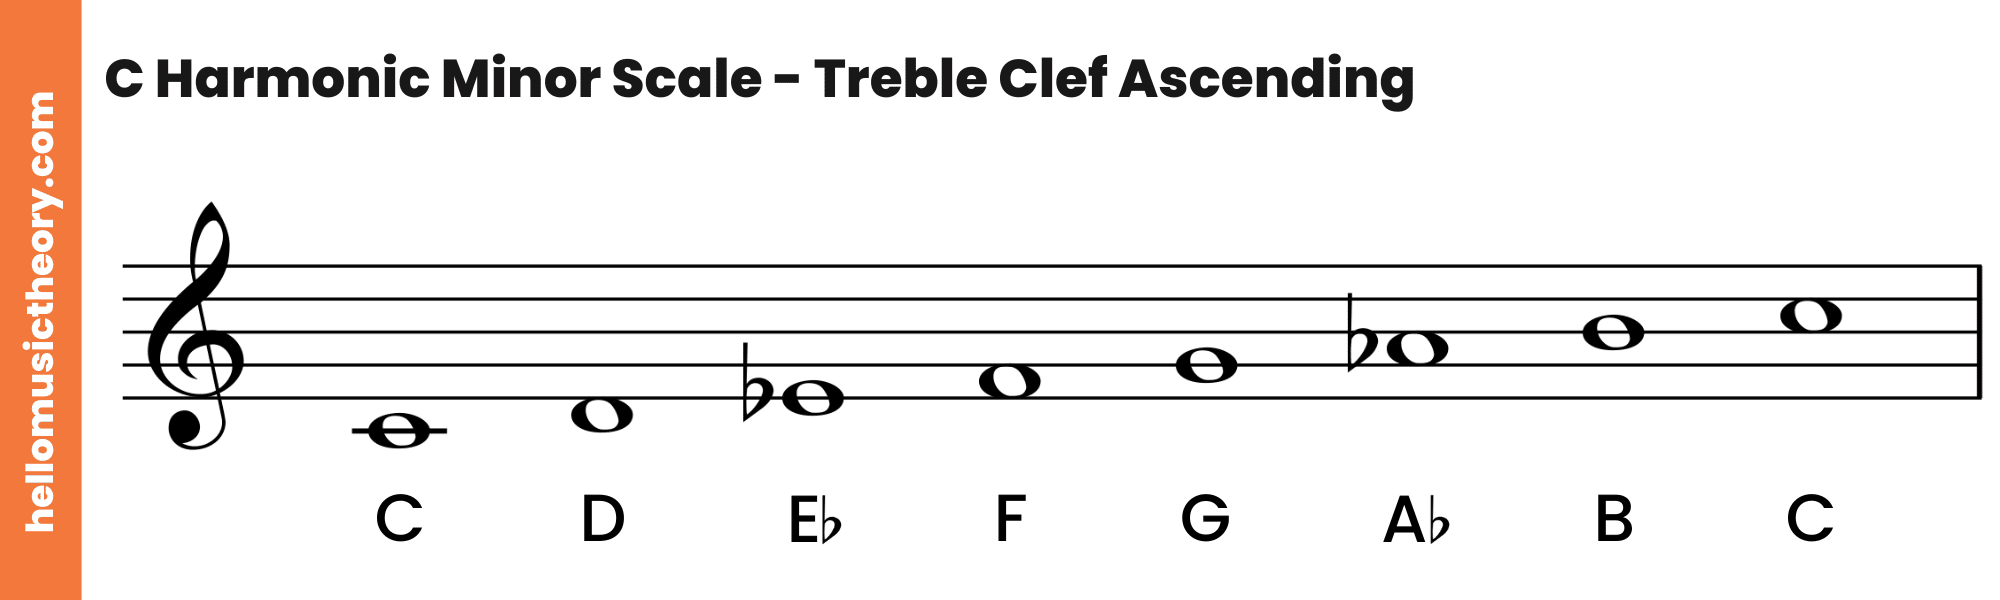 C Harmonic Minor Scale Treble Clef Ascending